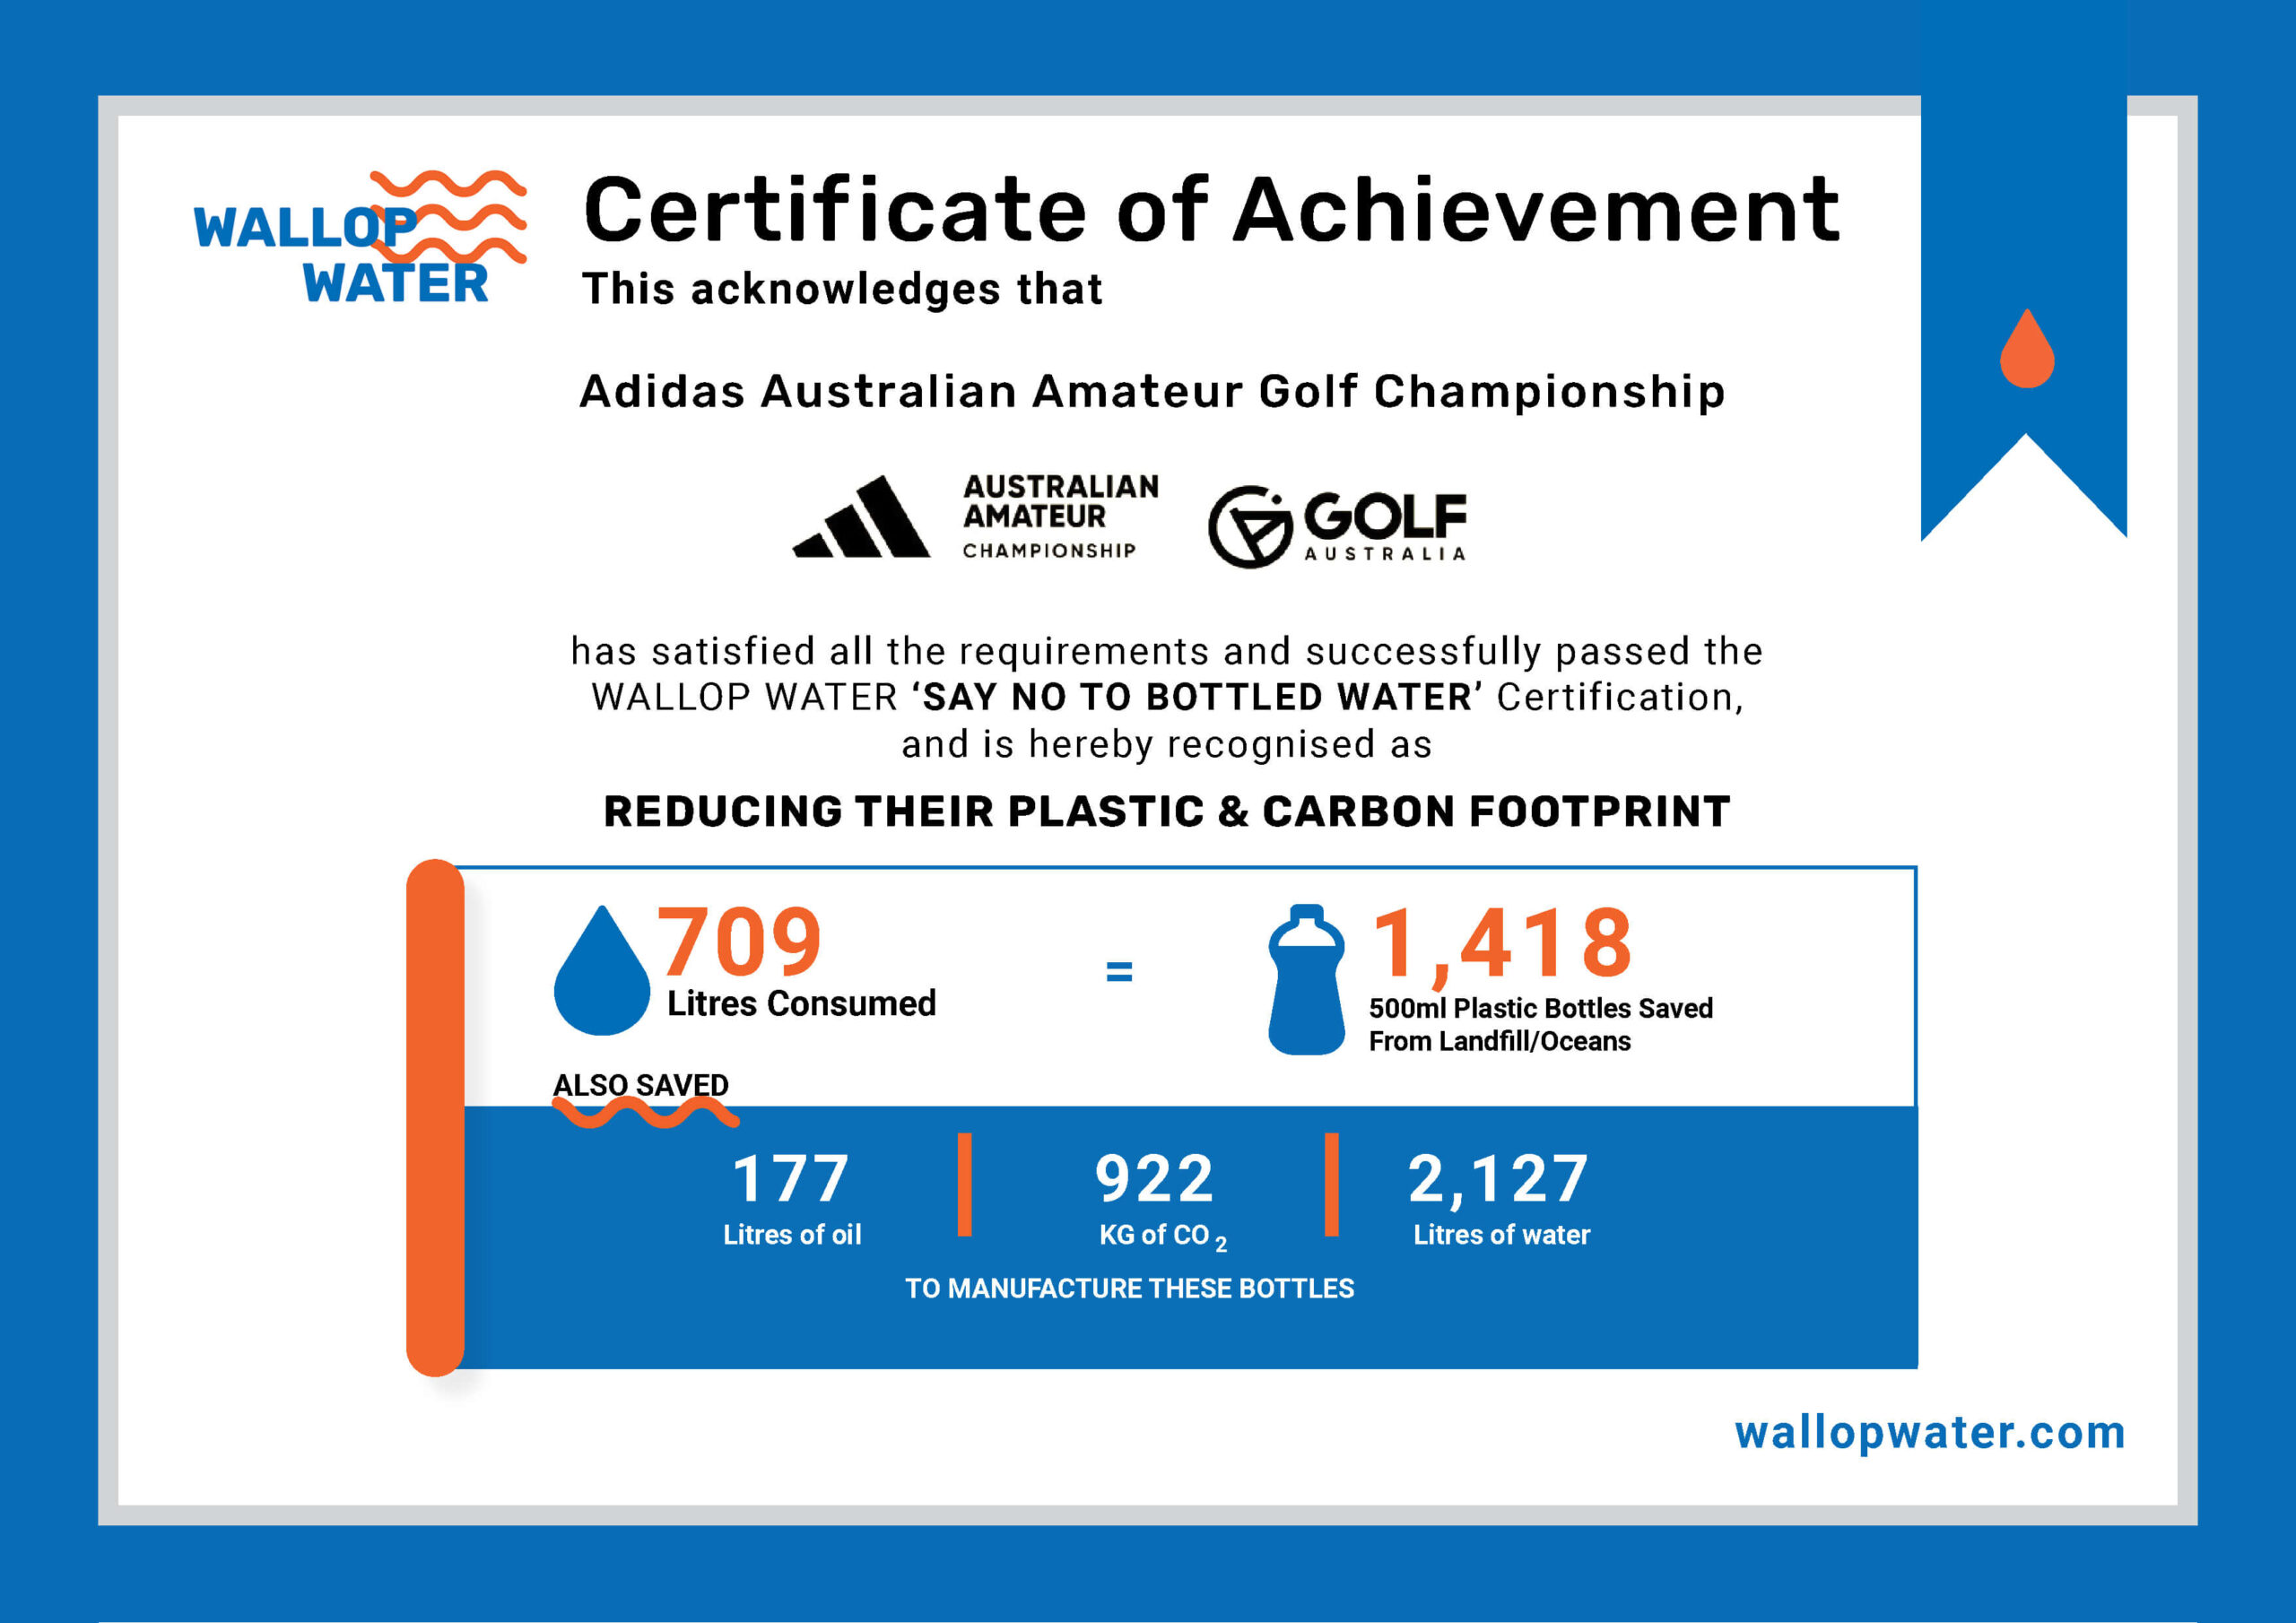 Wallop Water Certificate for Adidas Australian Amateur Golf Championship